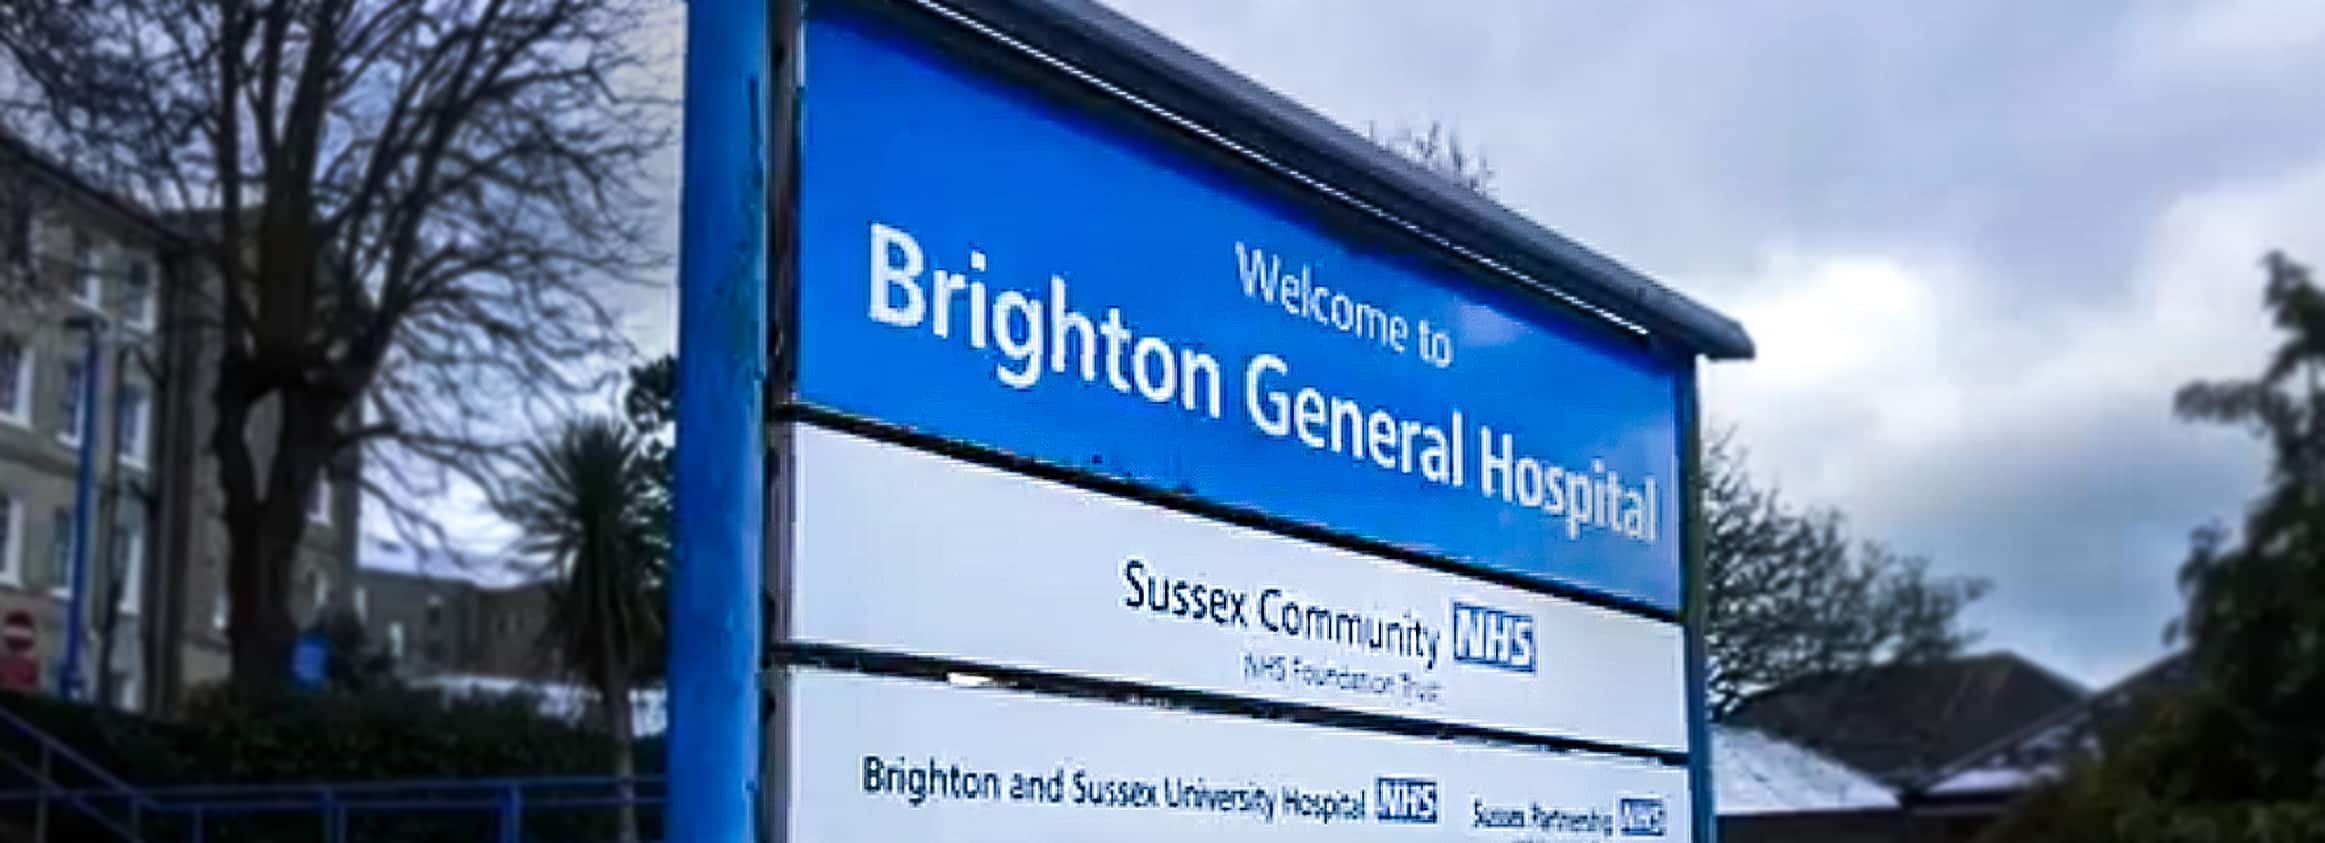 Gender-inclusive language used in Brighton NHS hospital